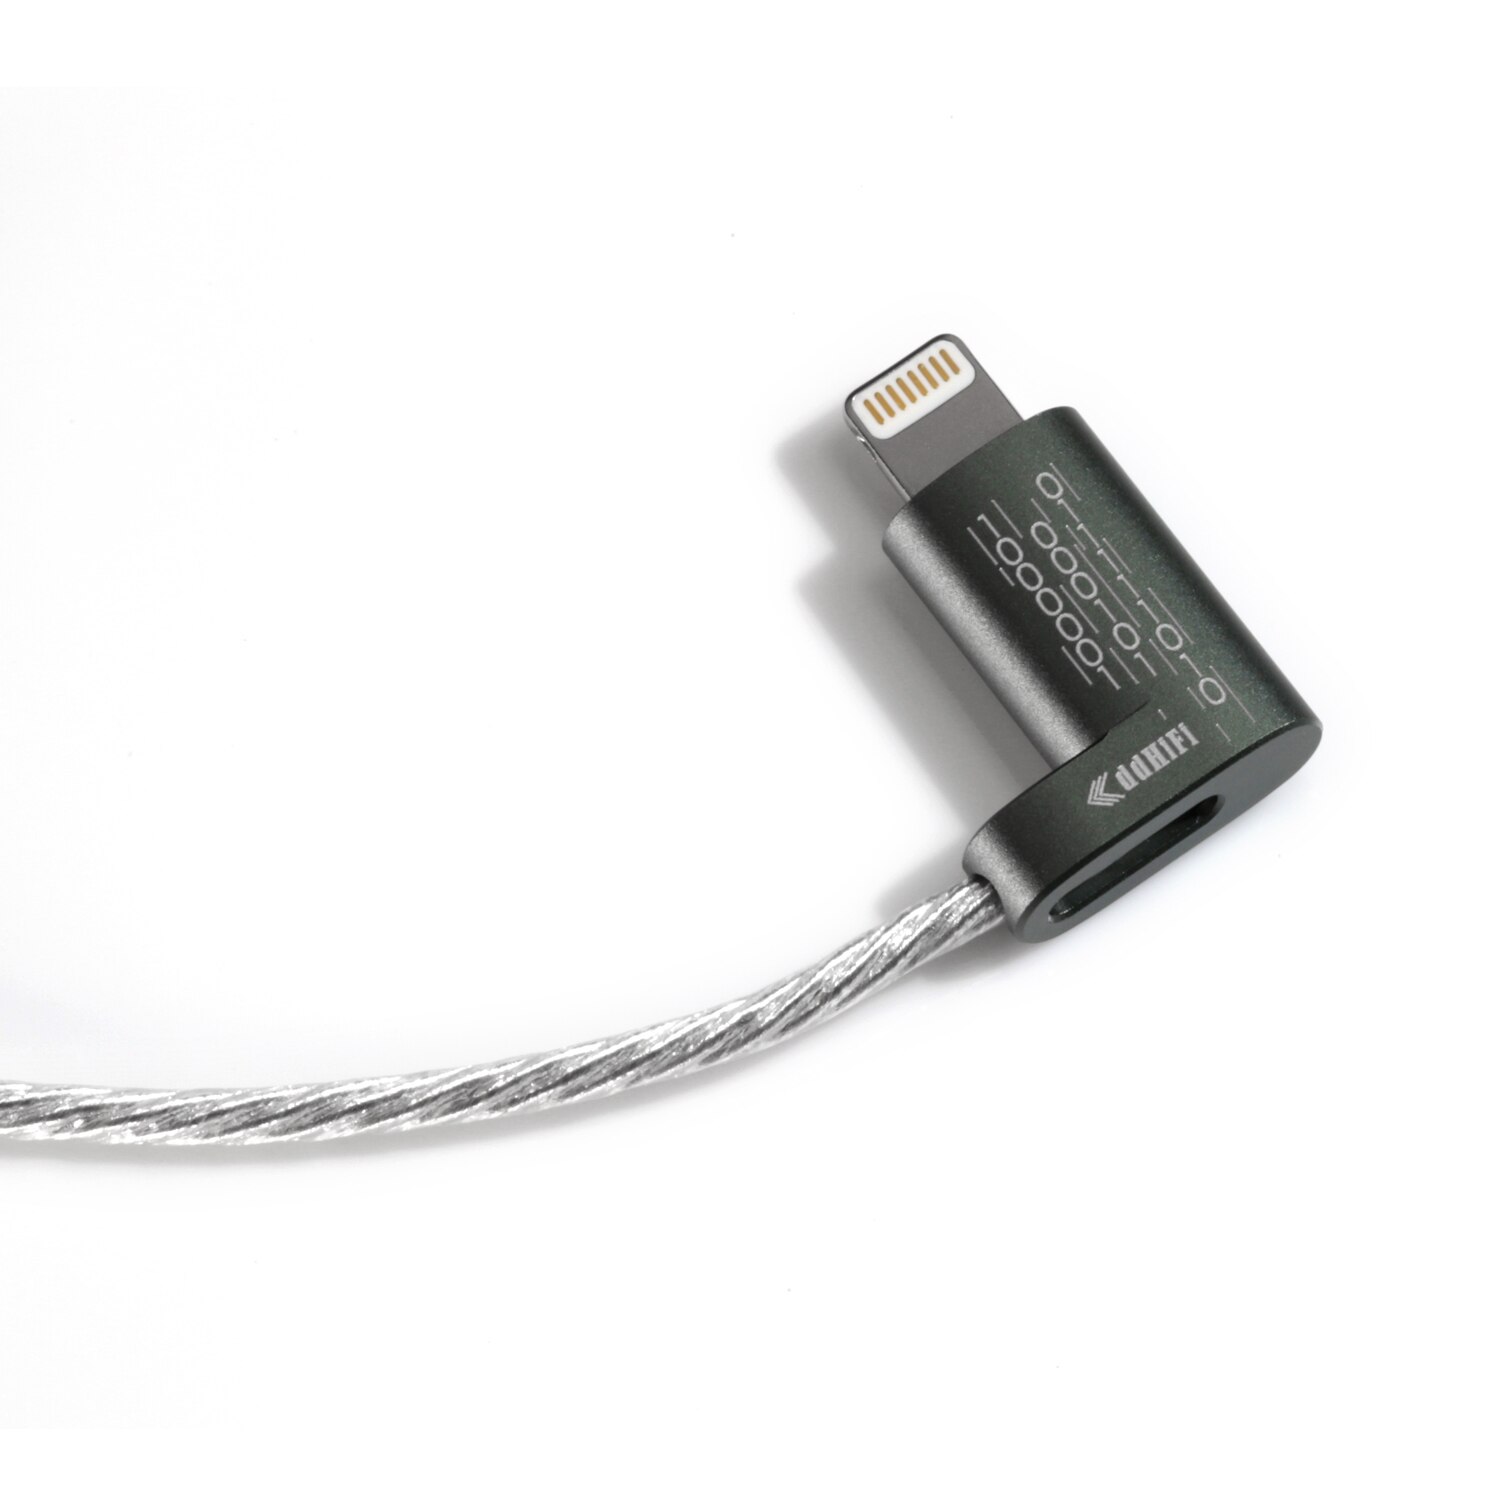 Dd Ddhifi MFi06 Licht-Ning Naar Usb Type C Data Cable Adapter Converter Voor Ios Iphone Fiio Q3 Q5S